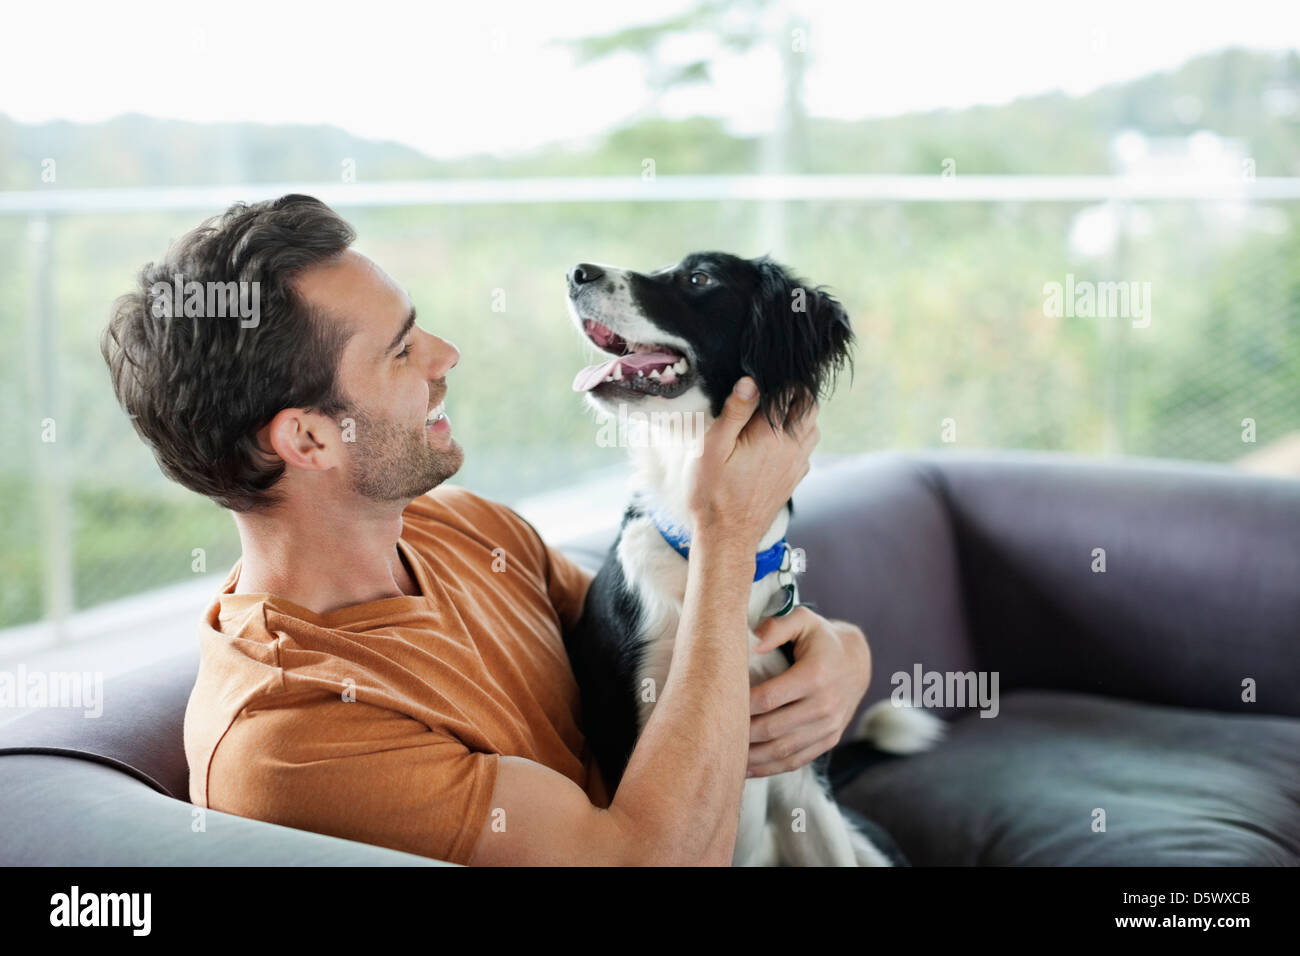 Smiling man petting dog on sofa Stock Photo